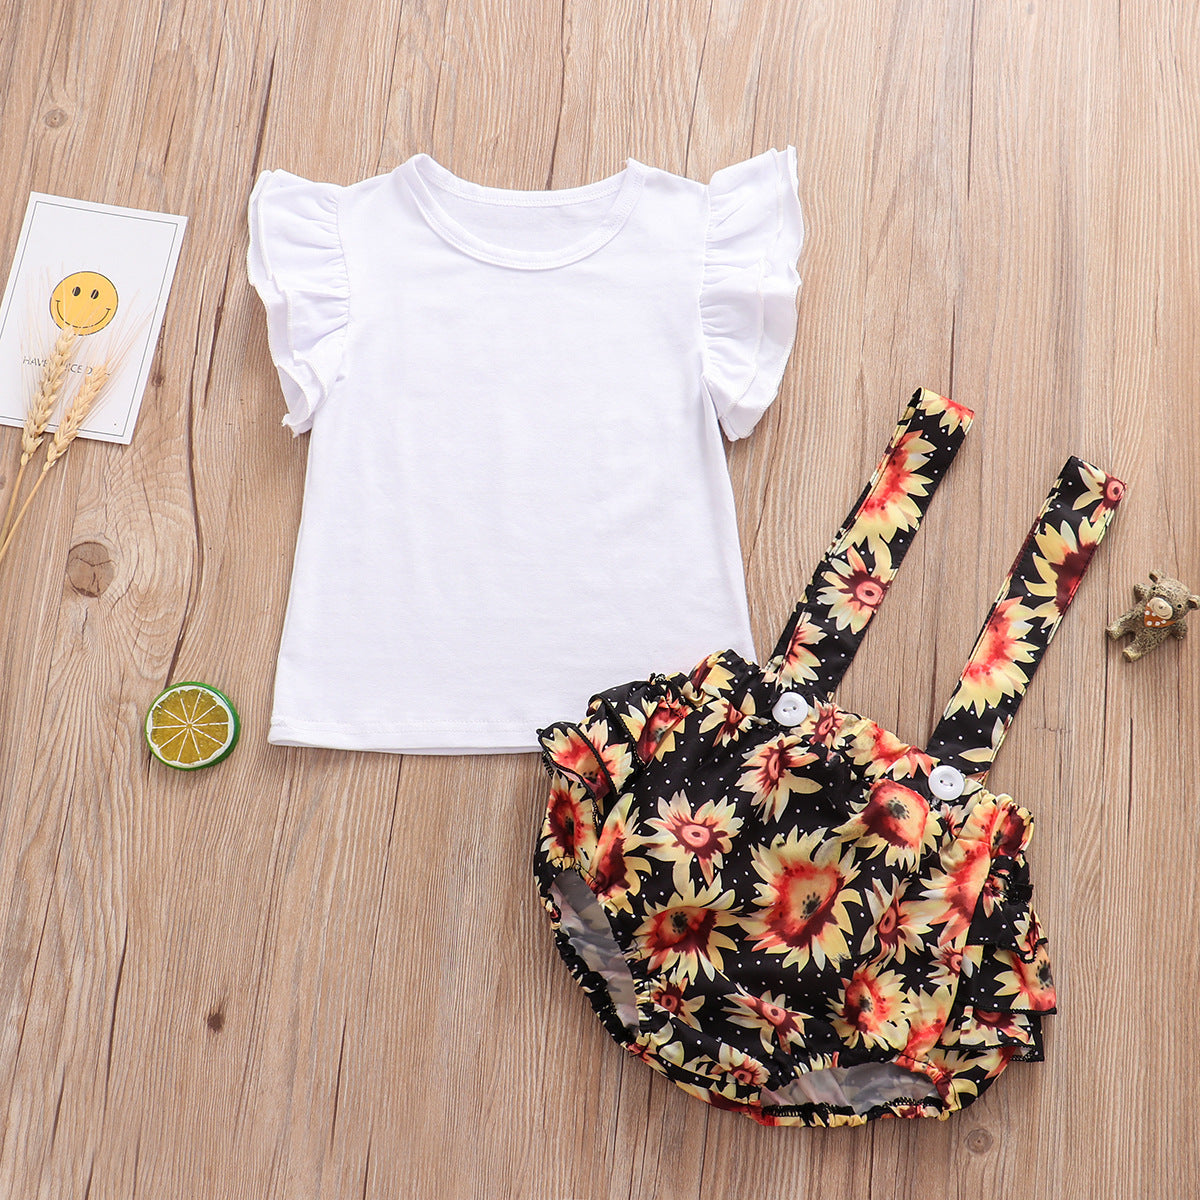 T-shirt Sunflower Suspender Shorts Girls Suit